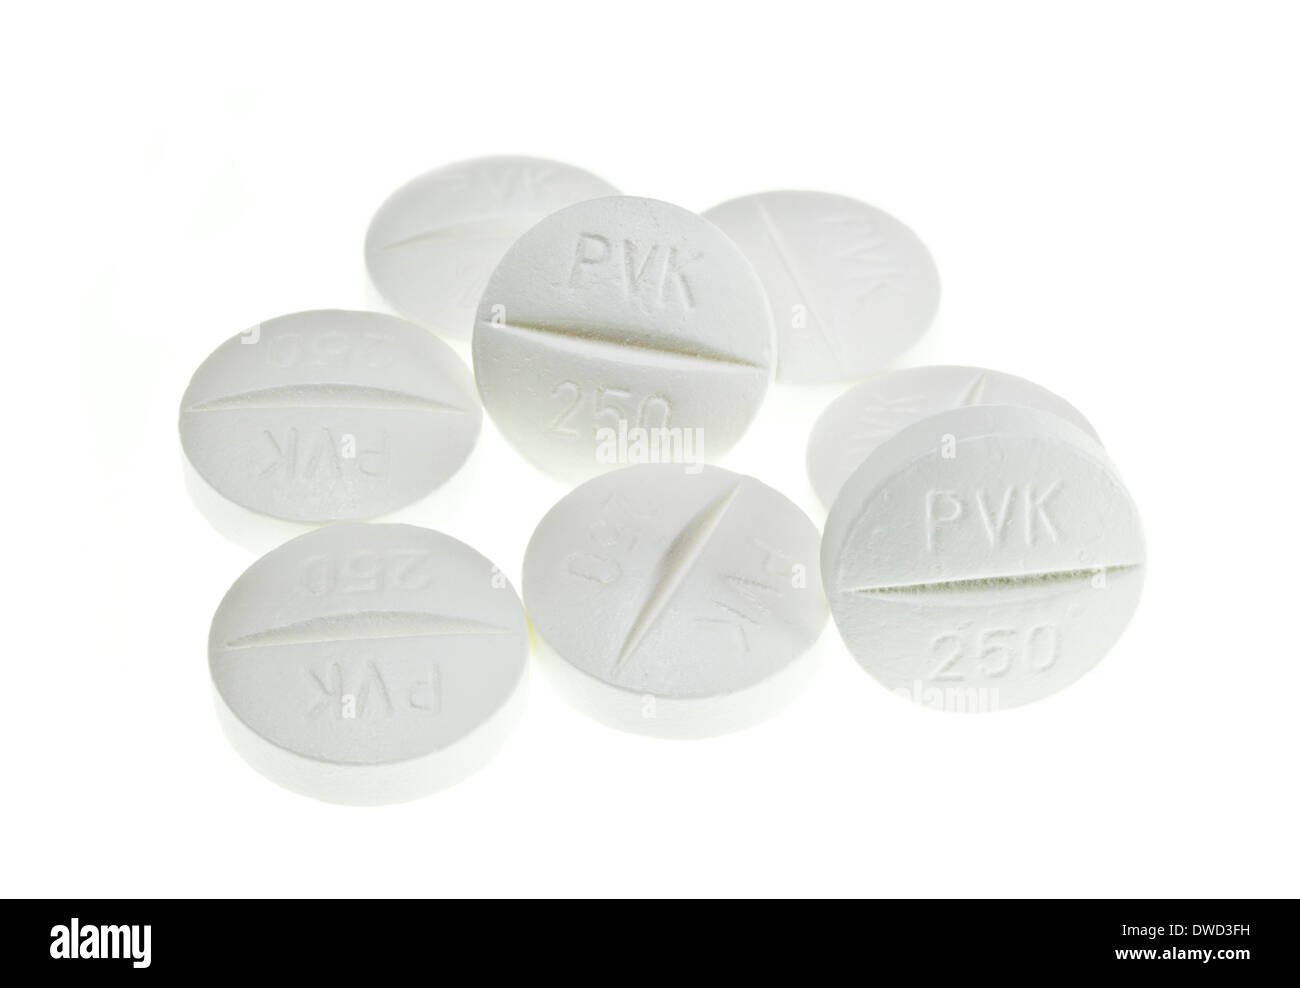 Penicillin vk tablets 250mg antibiotic tablets antibiotics on a white background strep a antibiotics uk phenoxymethylpenicillin tablets Stock Photo